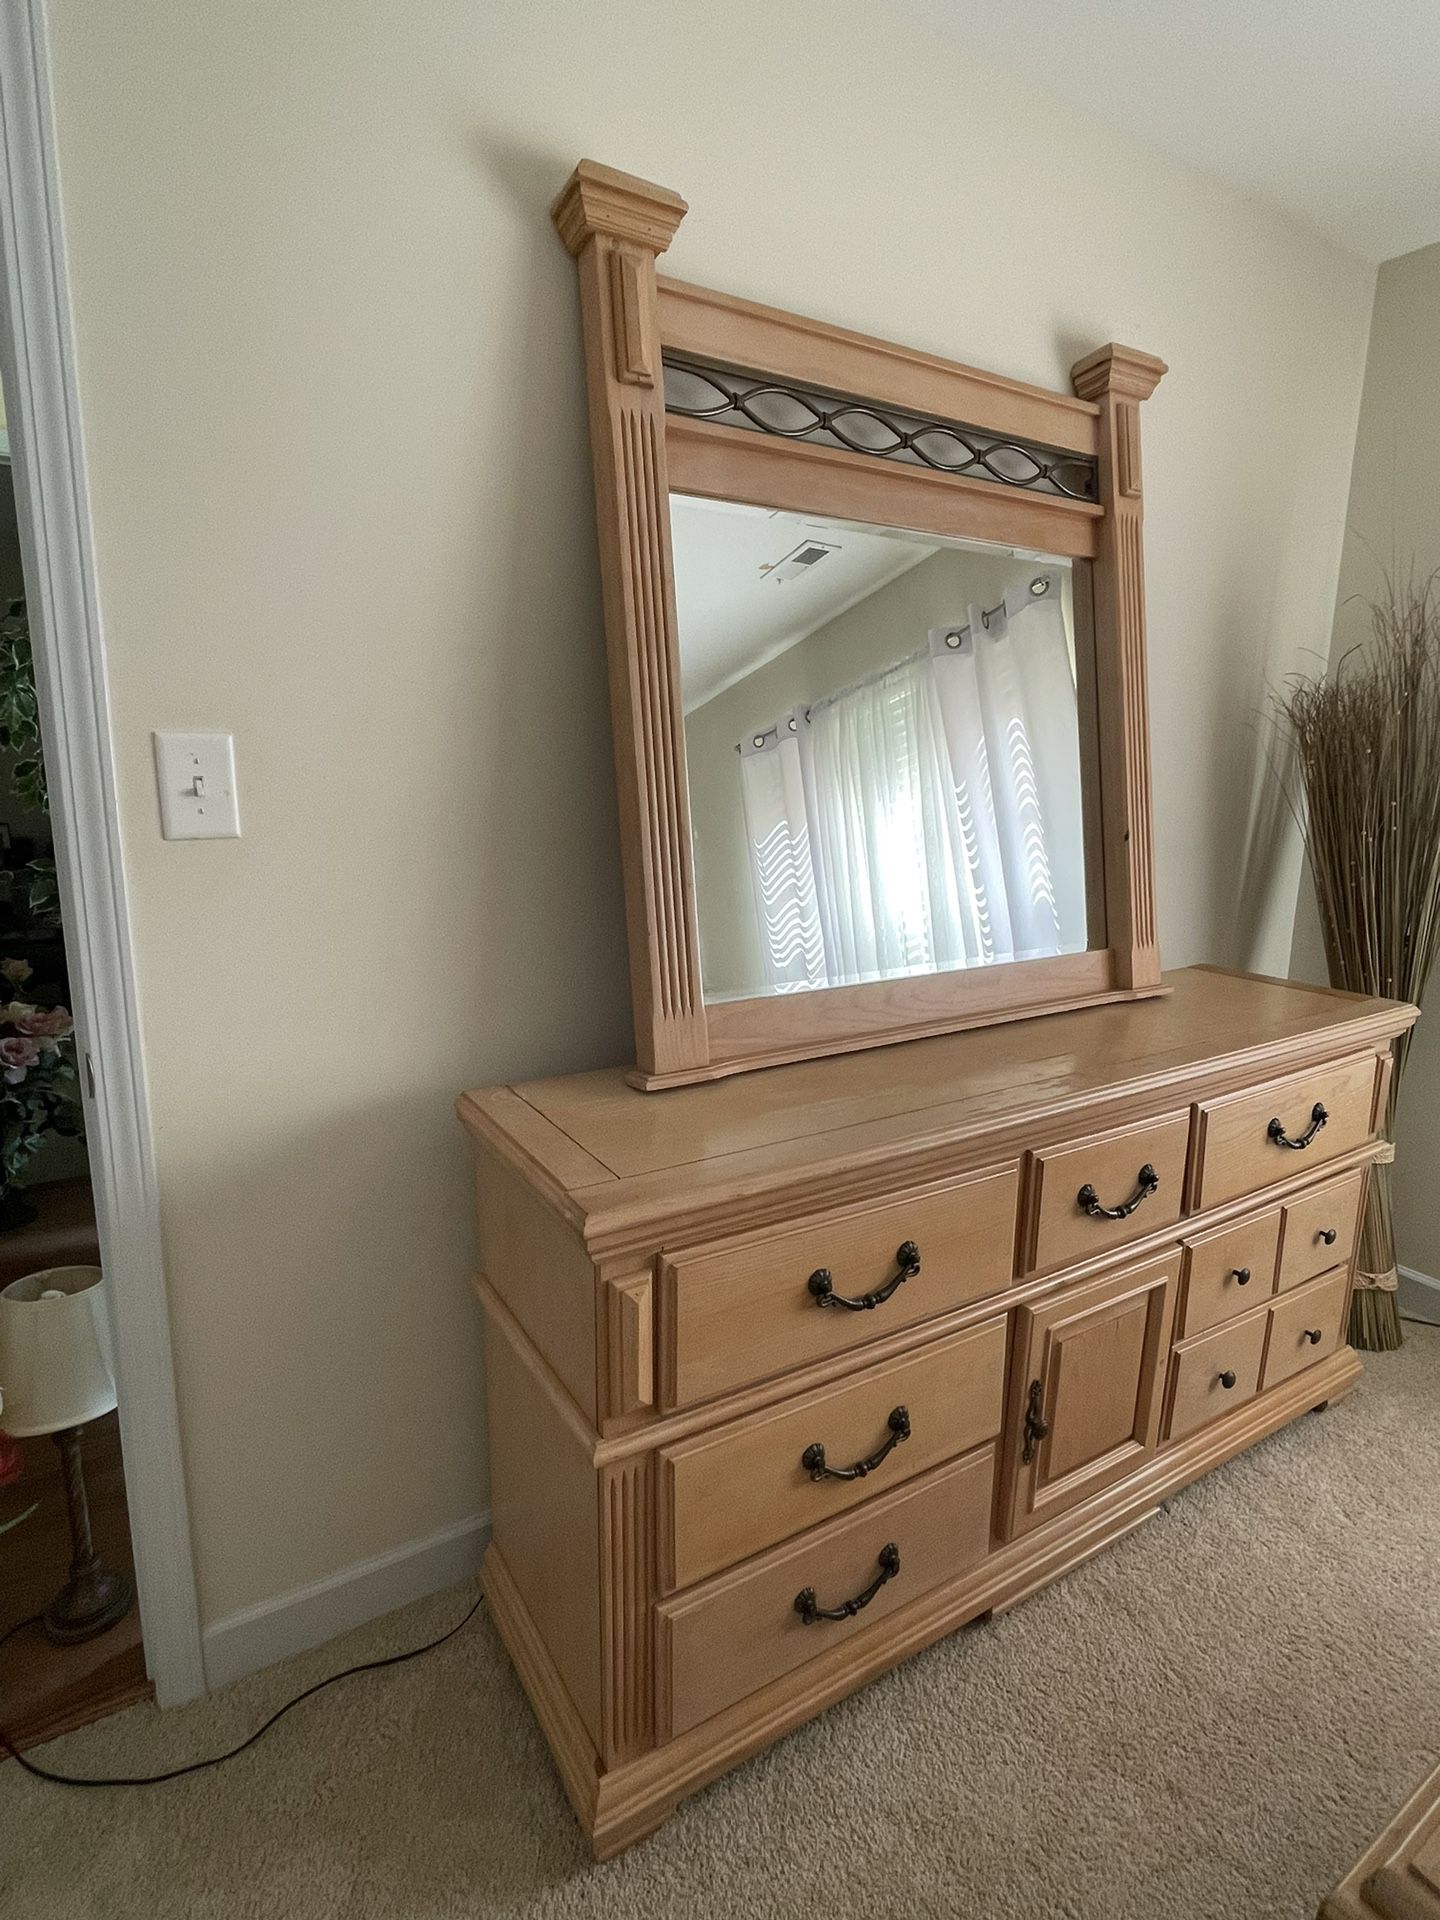 Dresser/mirror and Armiore